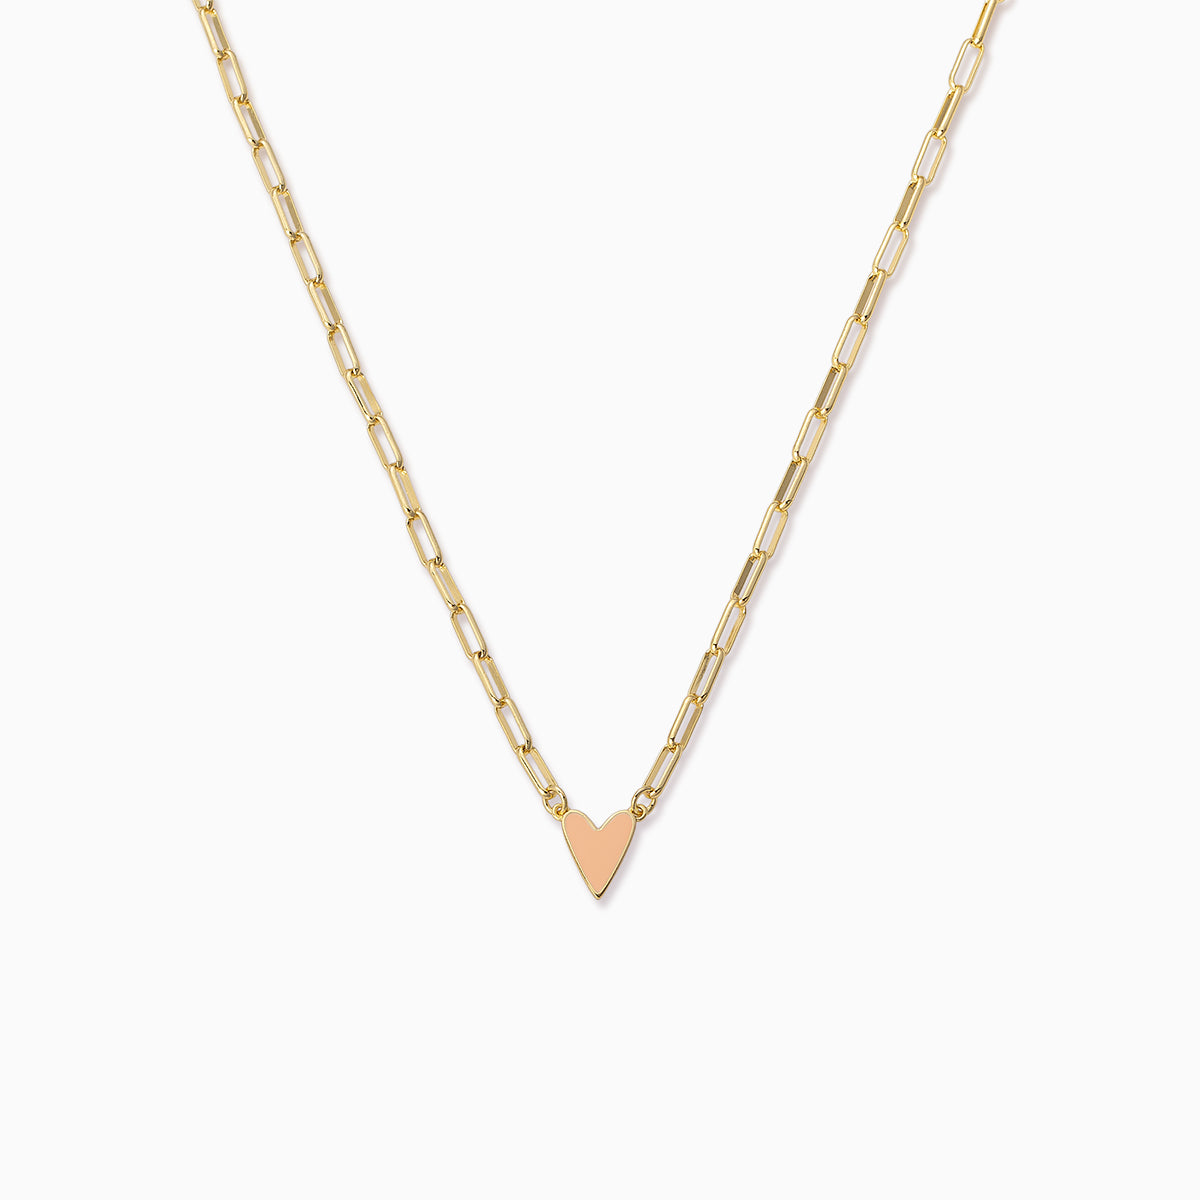 Enamel Heart Necklace | Gold Blush | Product Image | Uncommon James